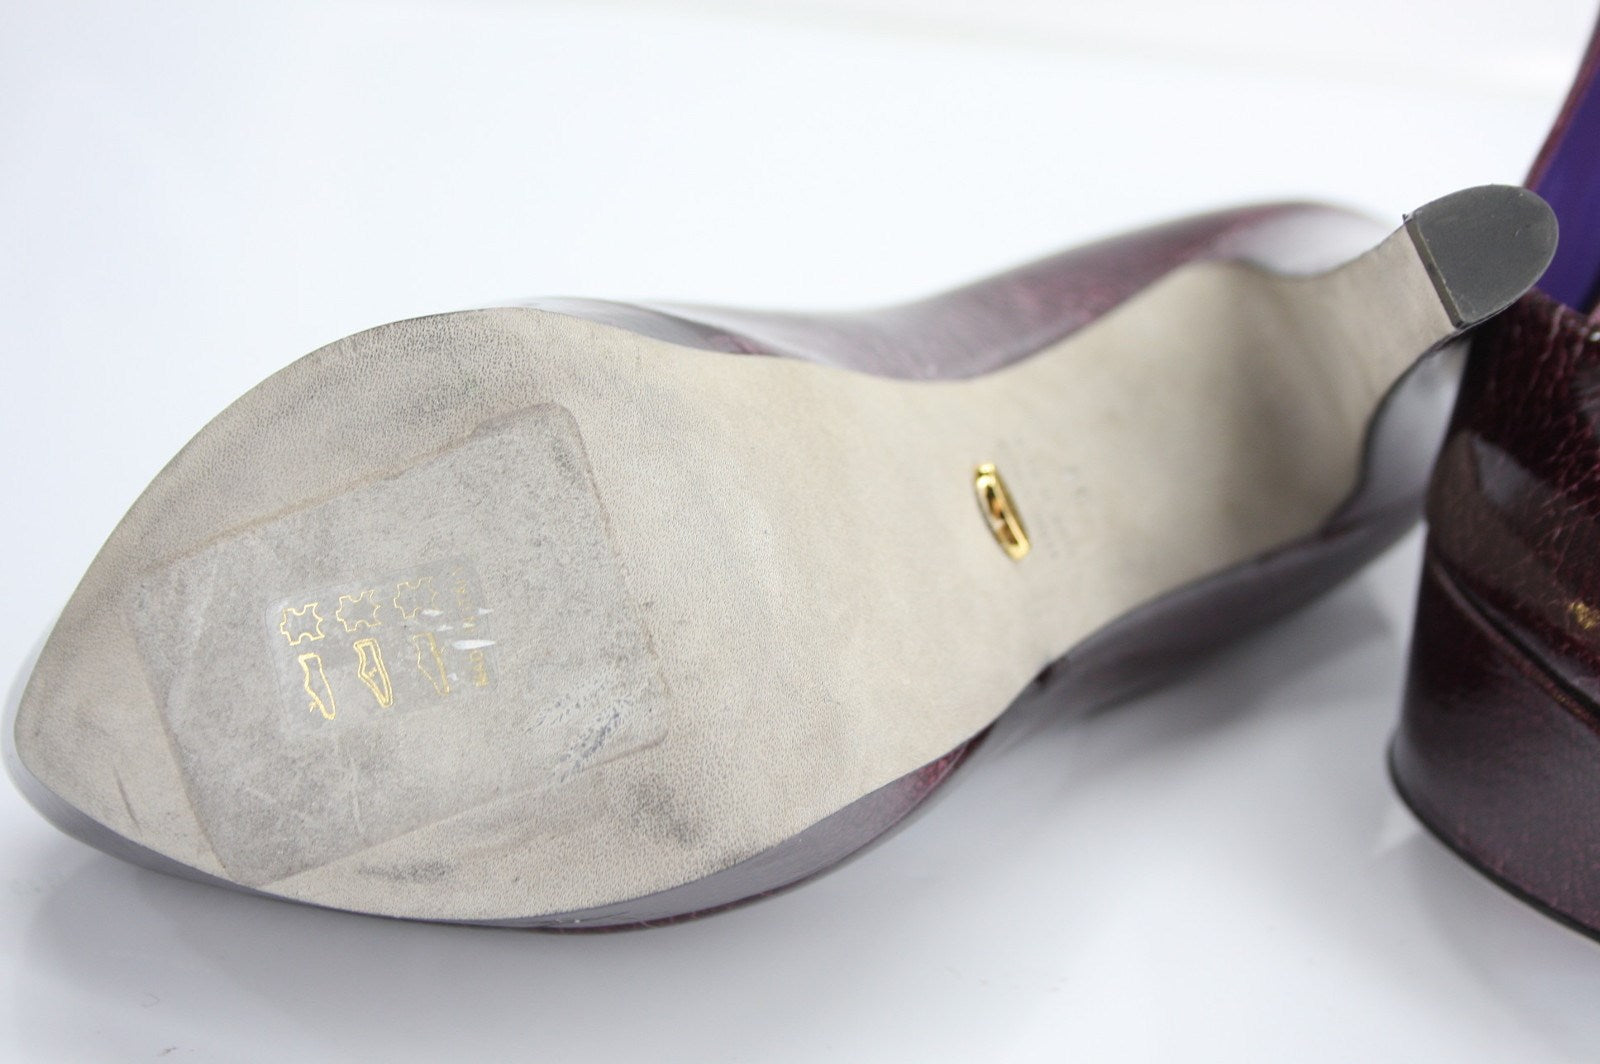 Sergio Rossi Patent Leather Miladys Platform Heel Pumps size 39 New $895 Women's